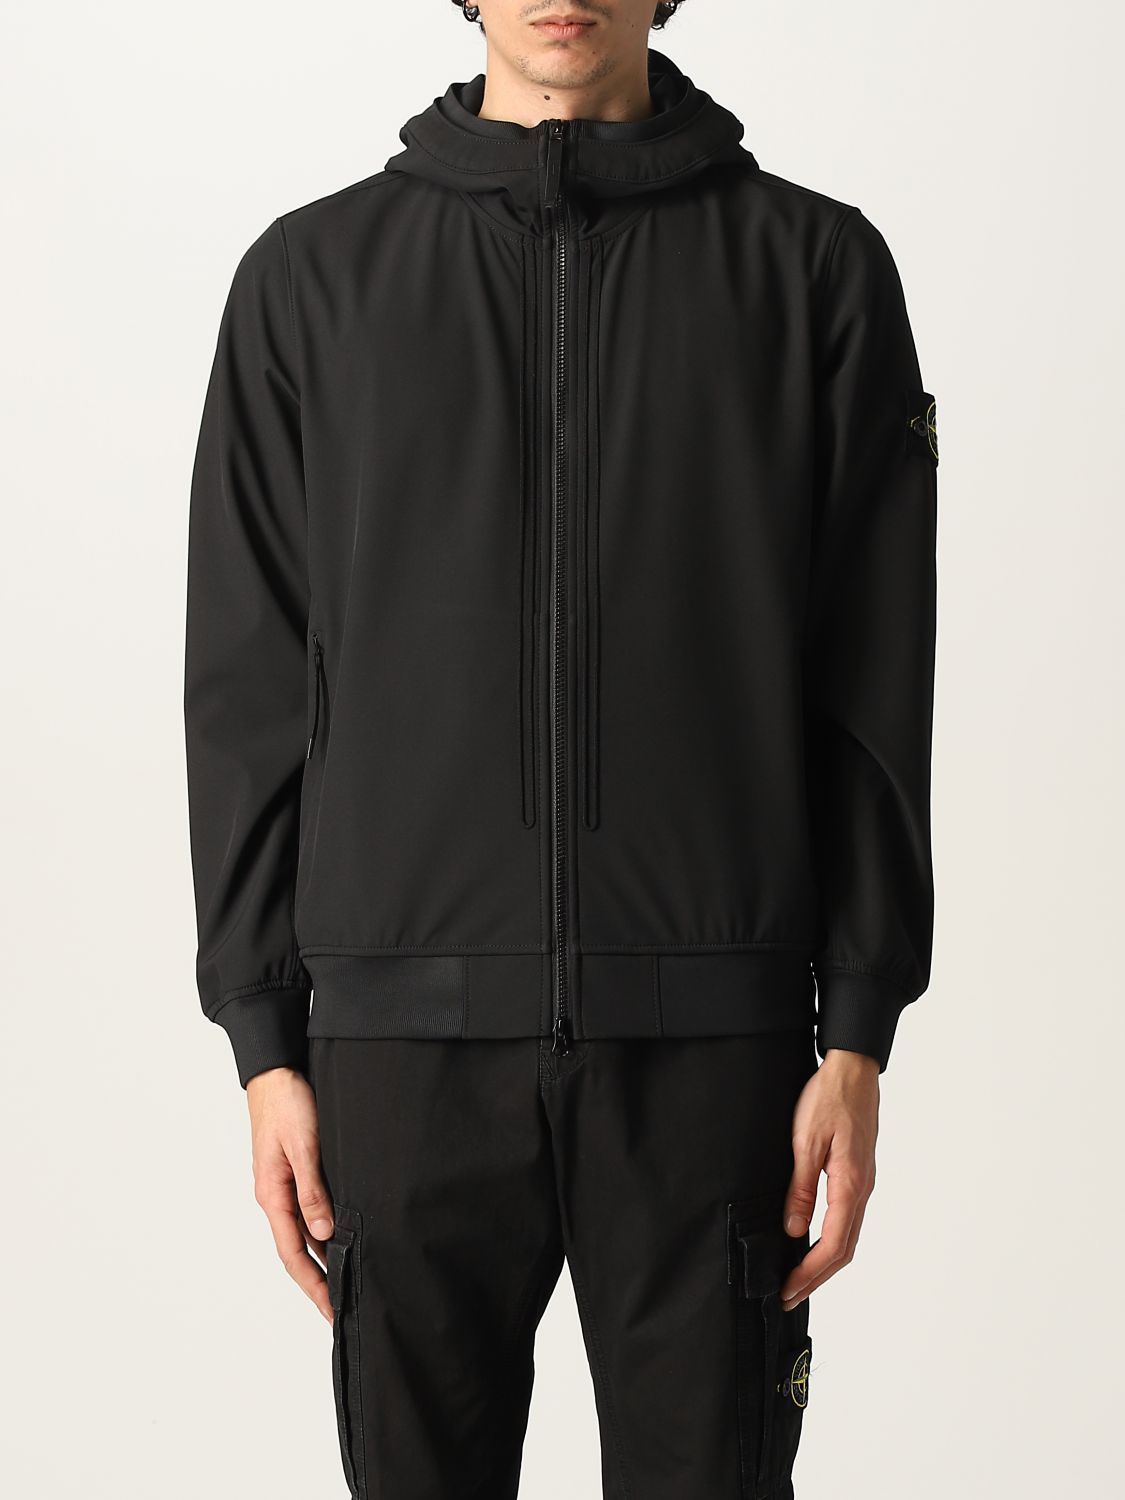 STONE ISLAND: Light Soft Shell-r_e.dye® technology jacket - Black 